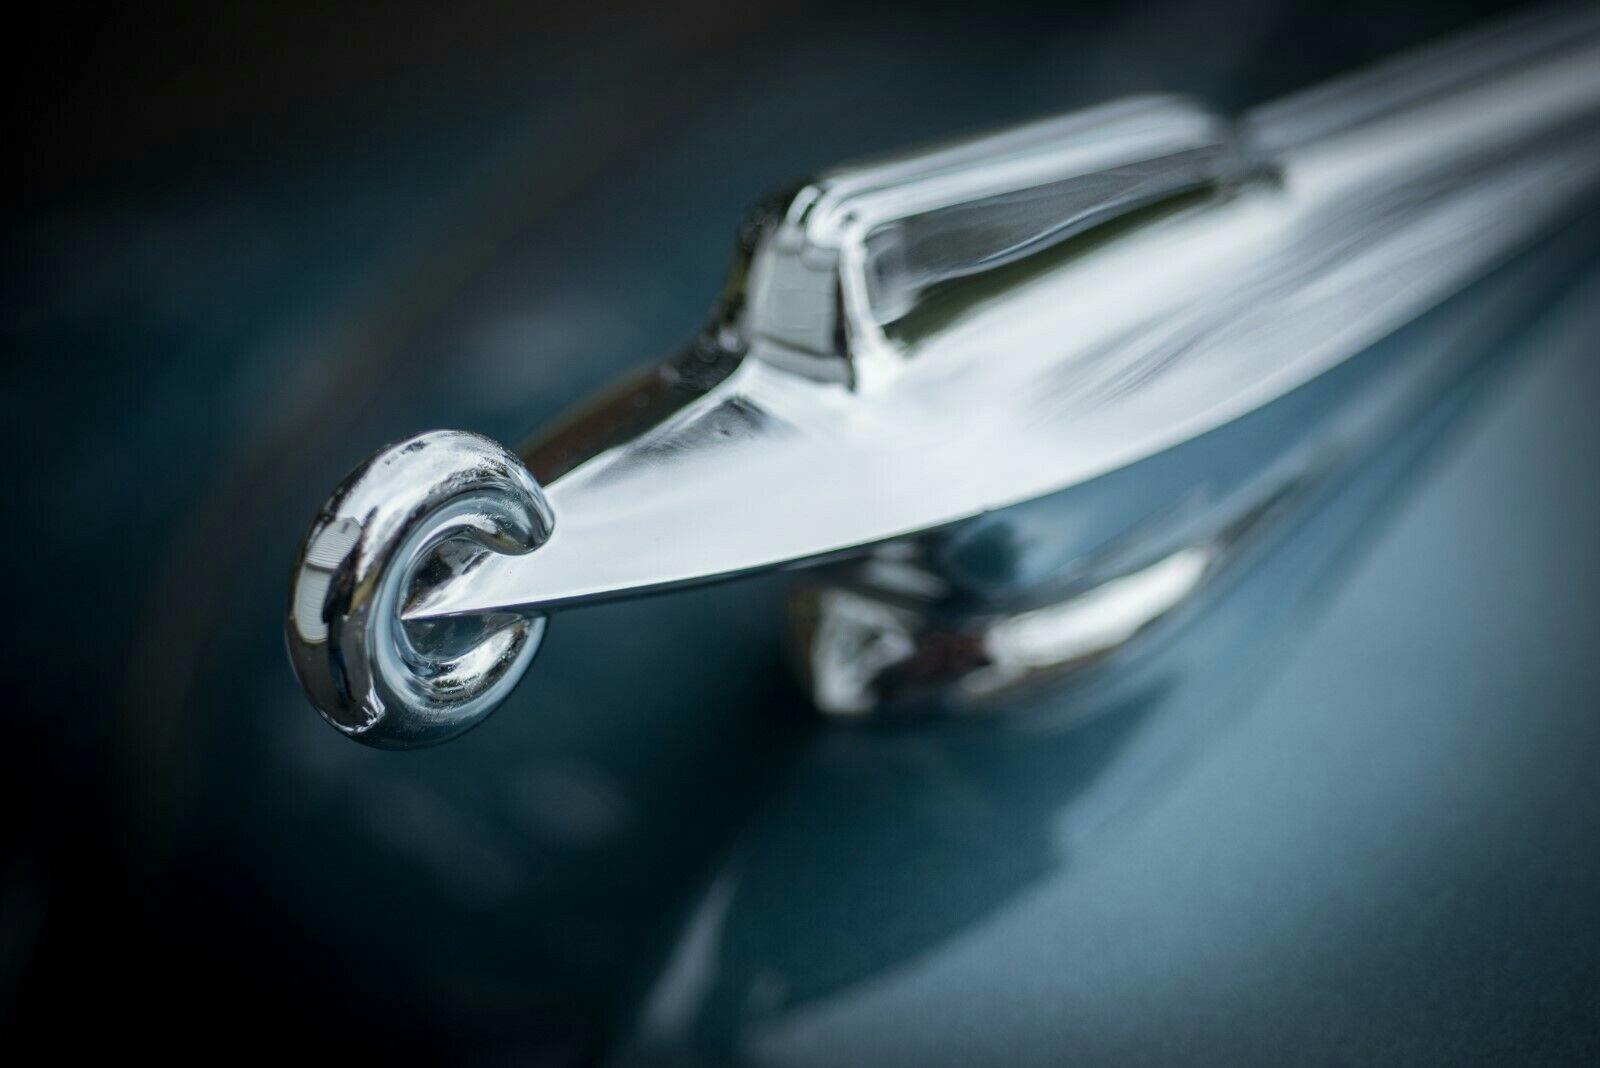 1949 Packard Deluxe Club Sedan - Close-up hood ornament